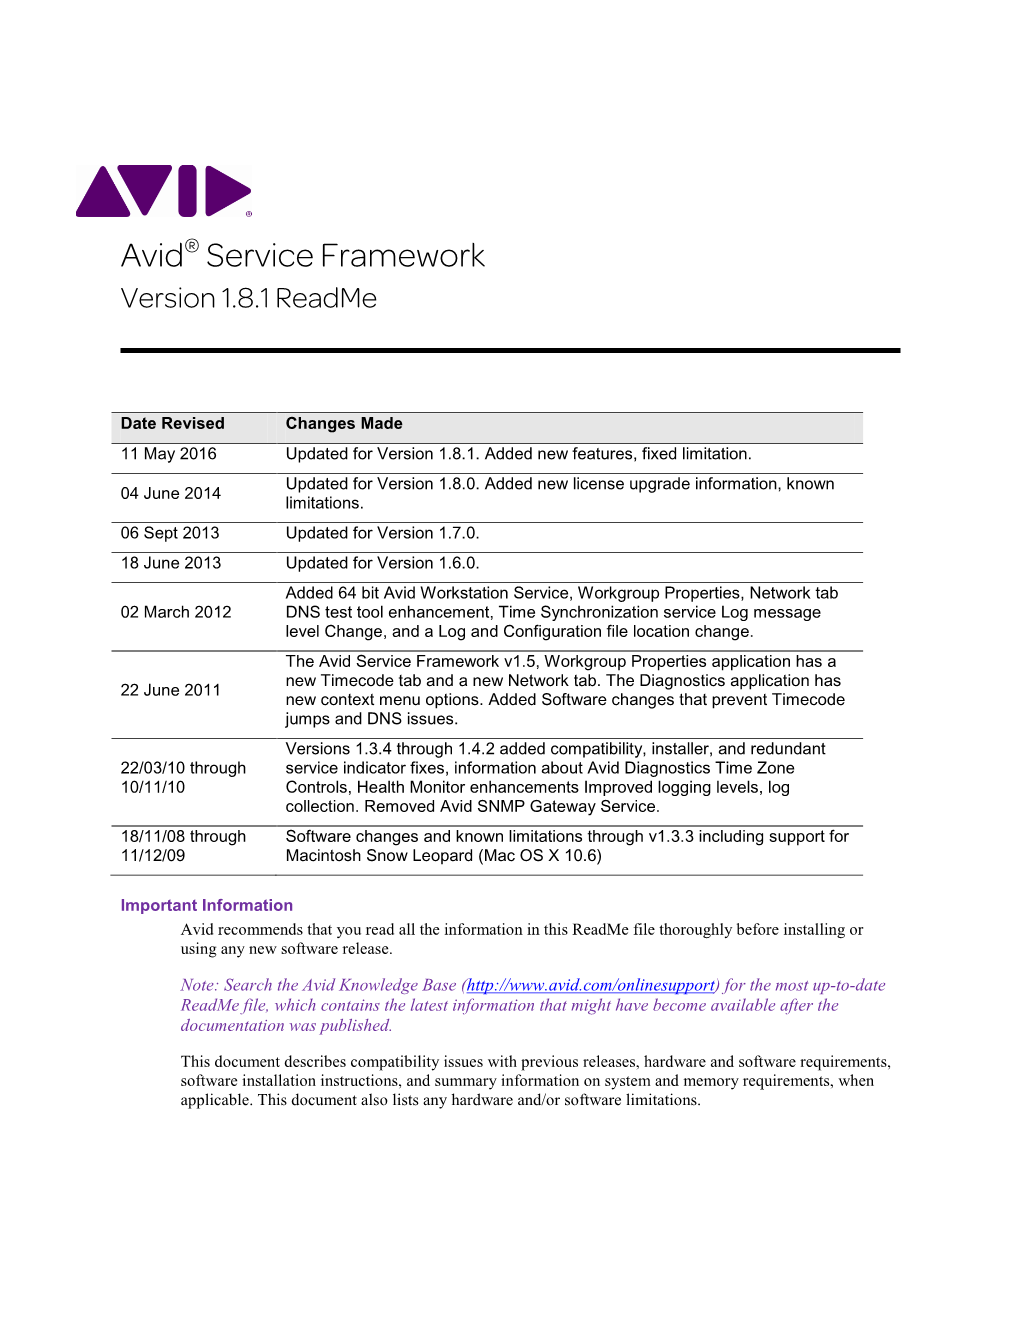 Avid® Service Framework Version 1.8.1 Readme